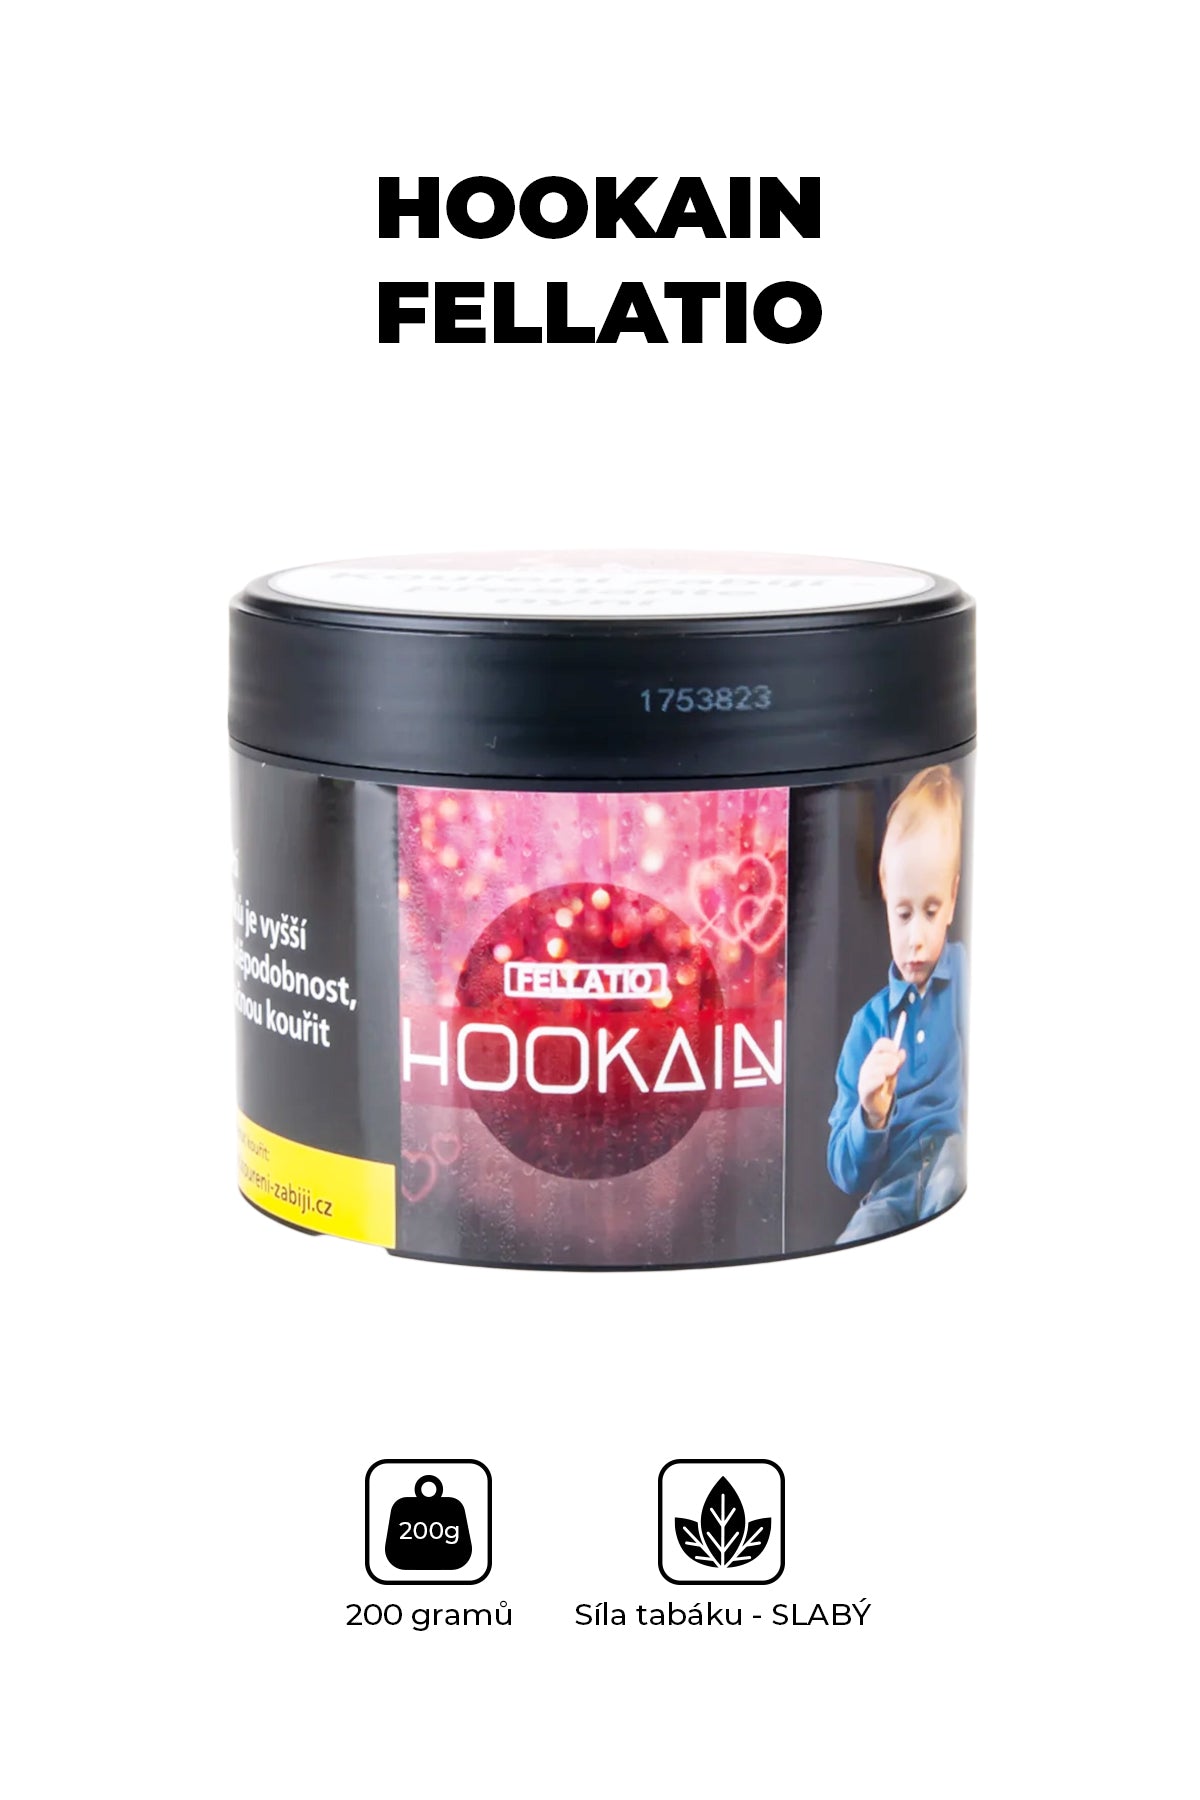 Tabák - Hookain 200g - Fellatio